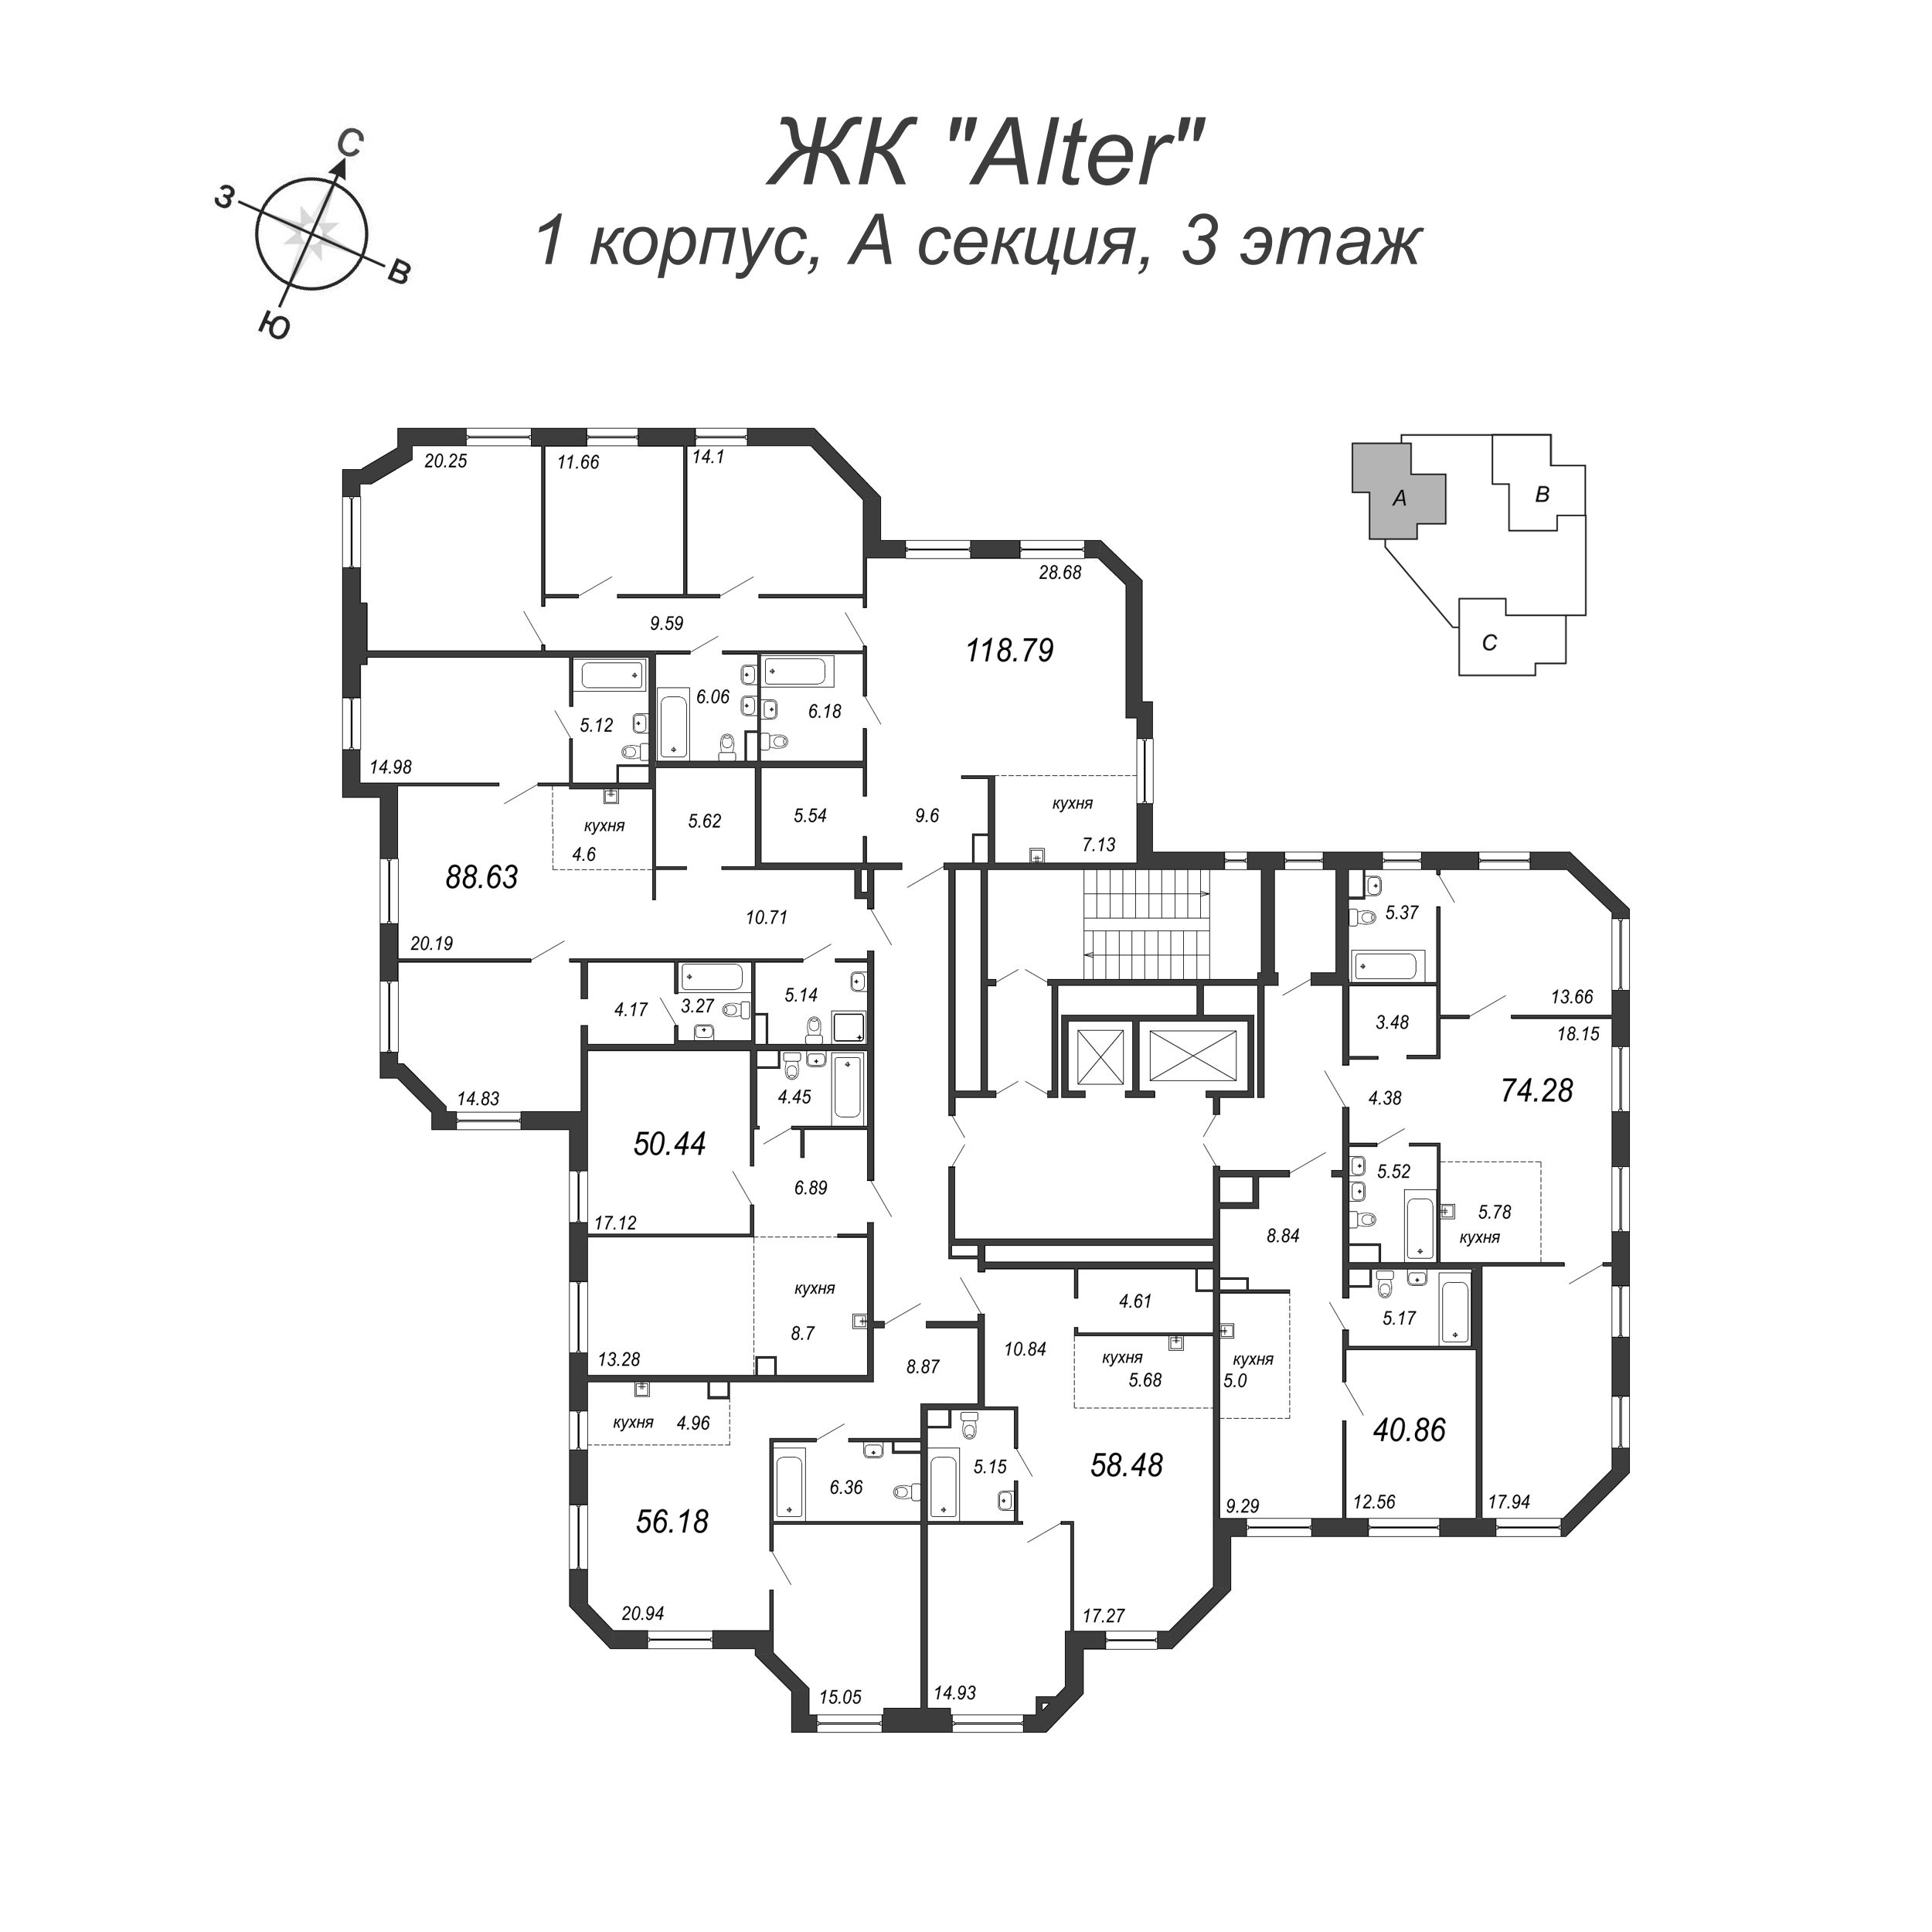 4-комнатная (Евро) квартира, 118.79 м² - планировка этажа